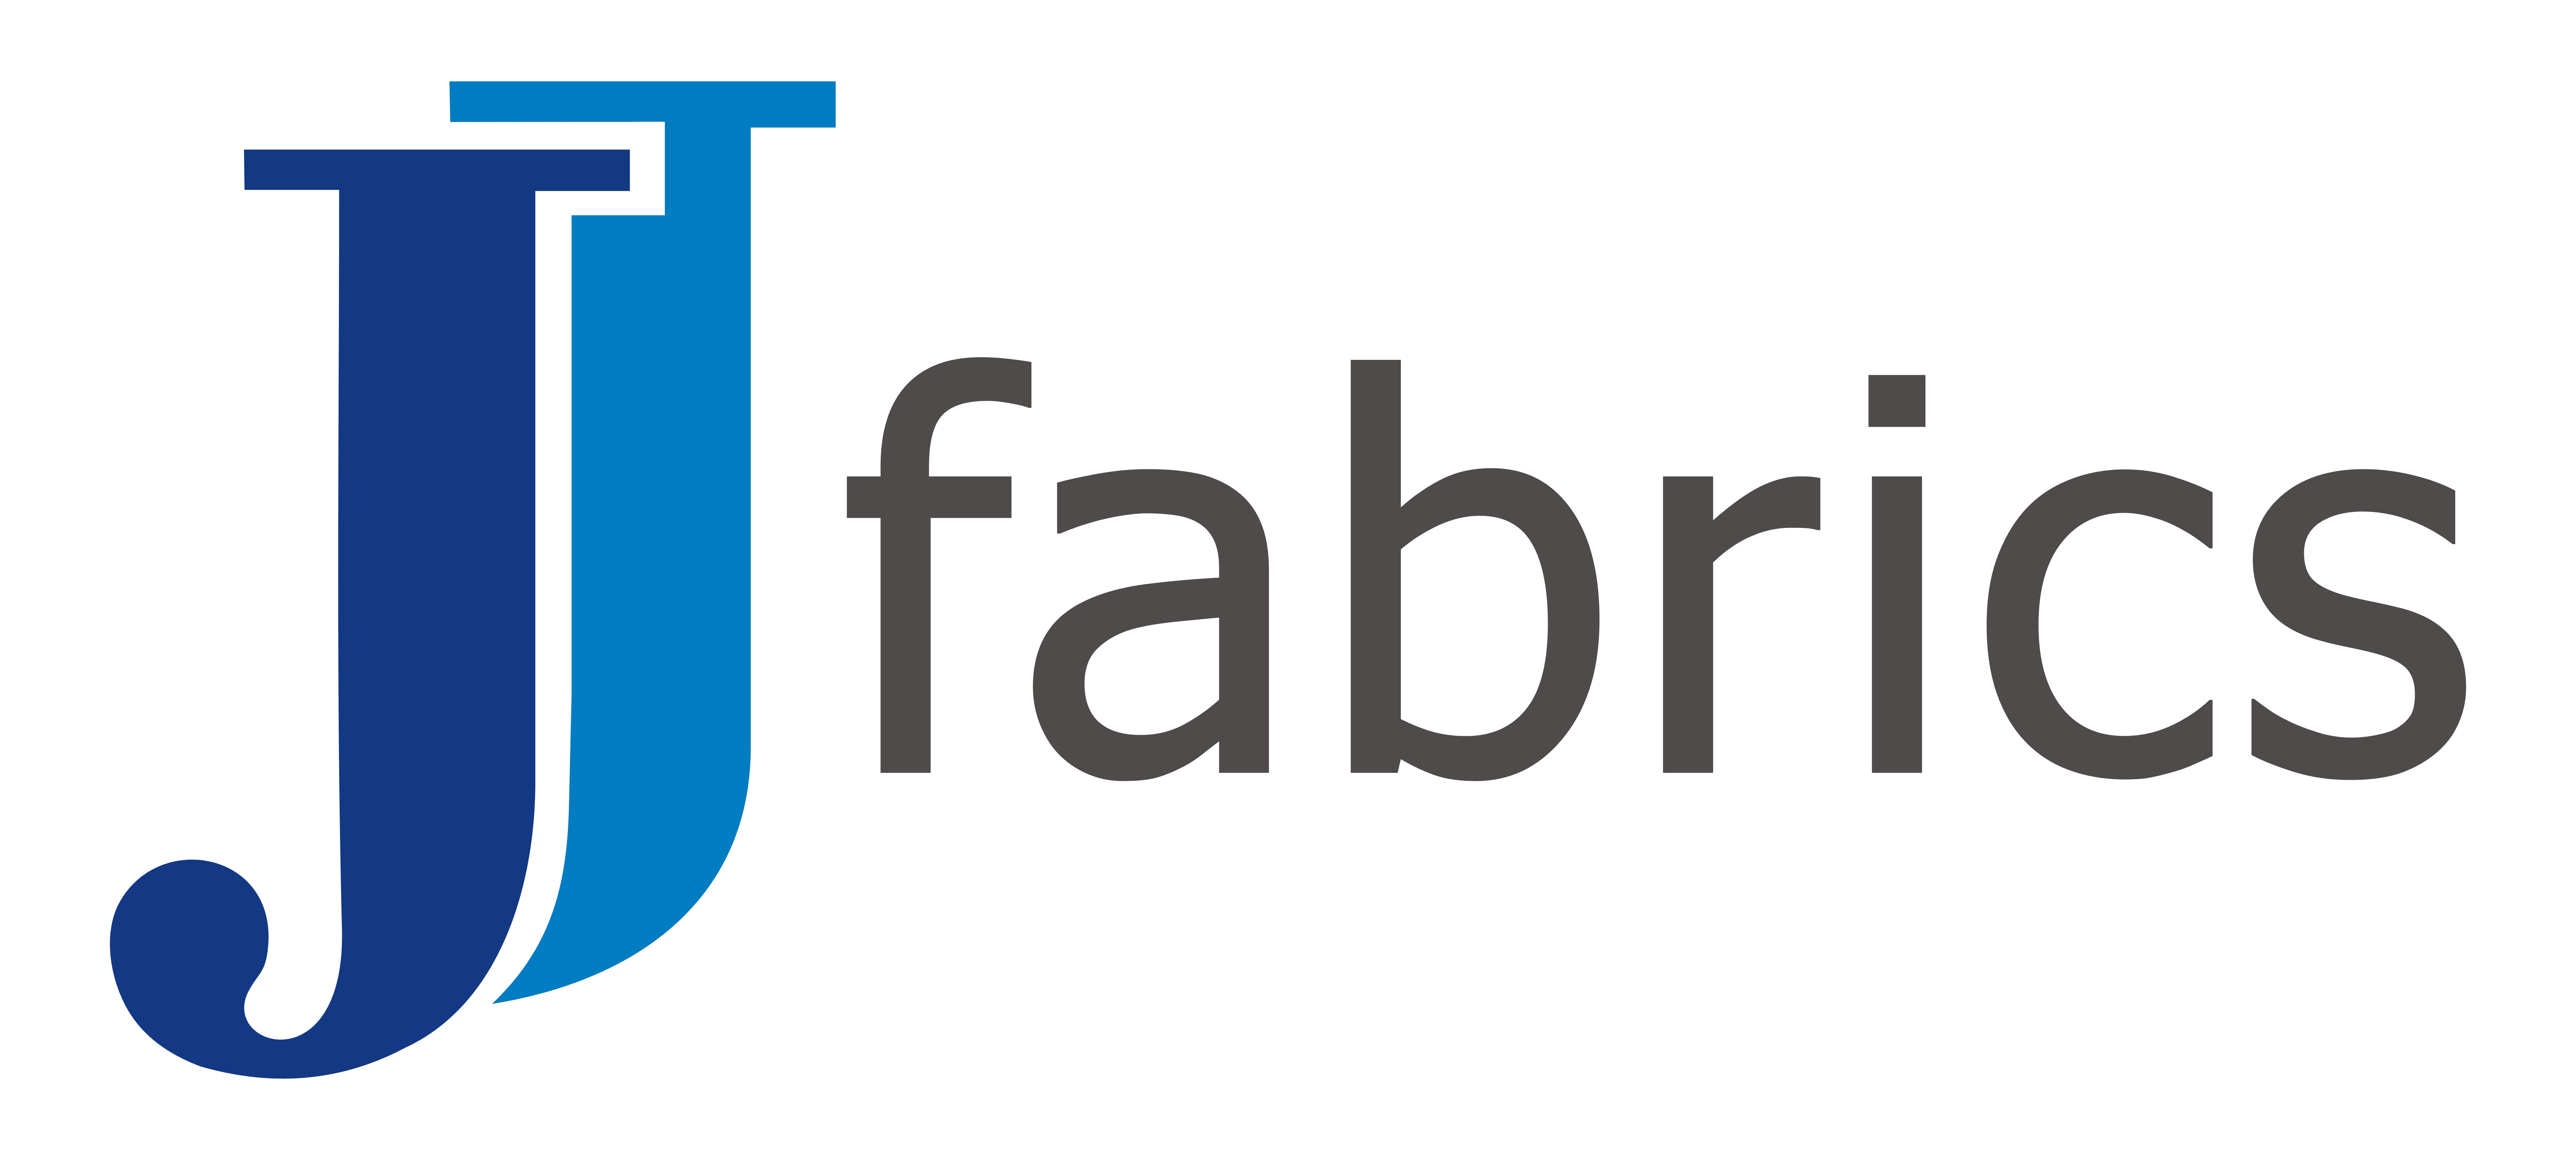 JJ Fabrics